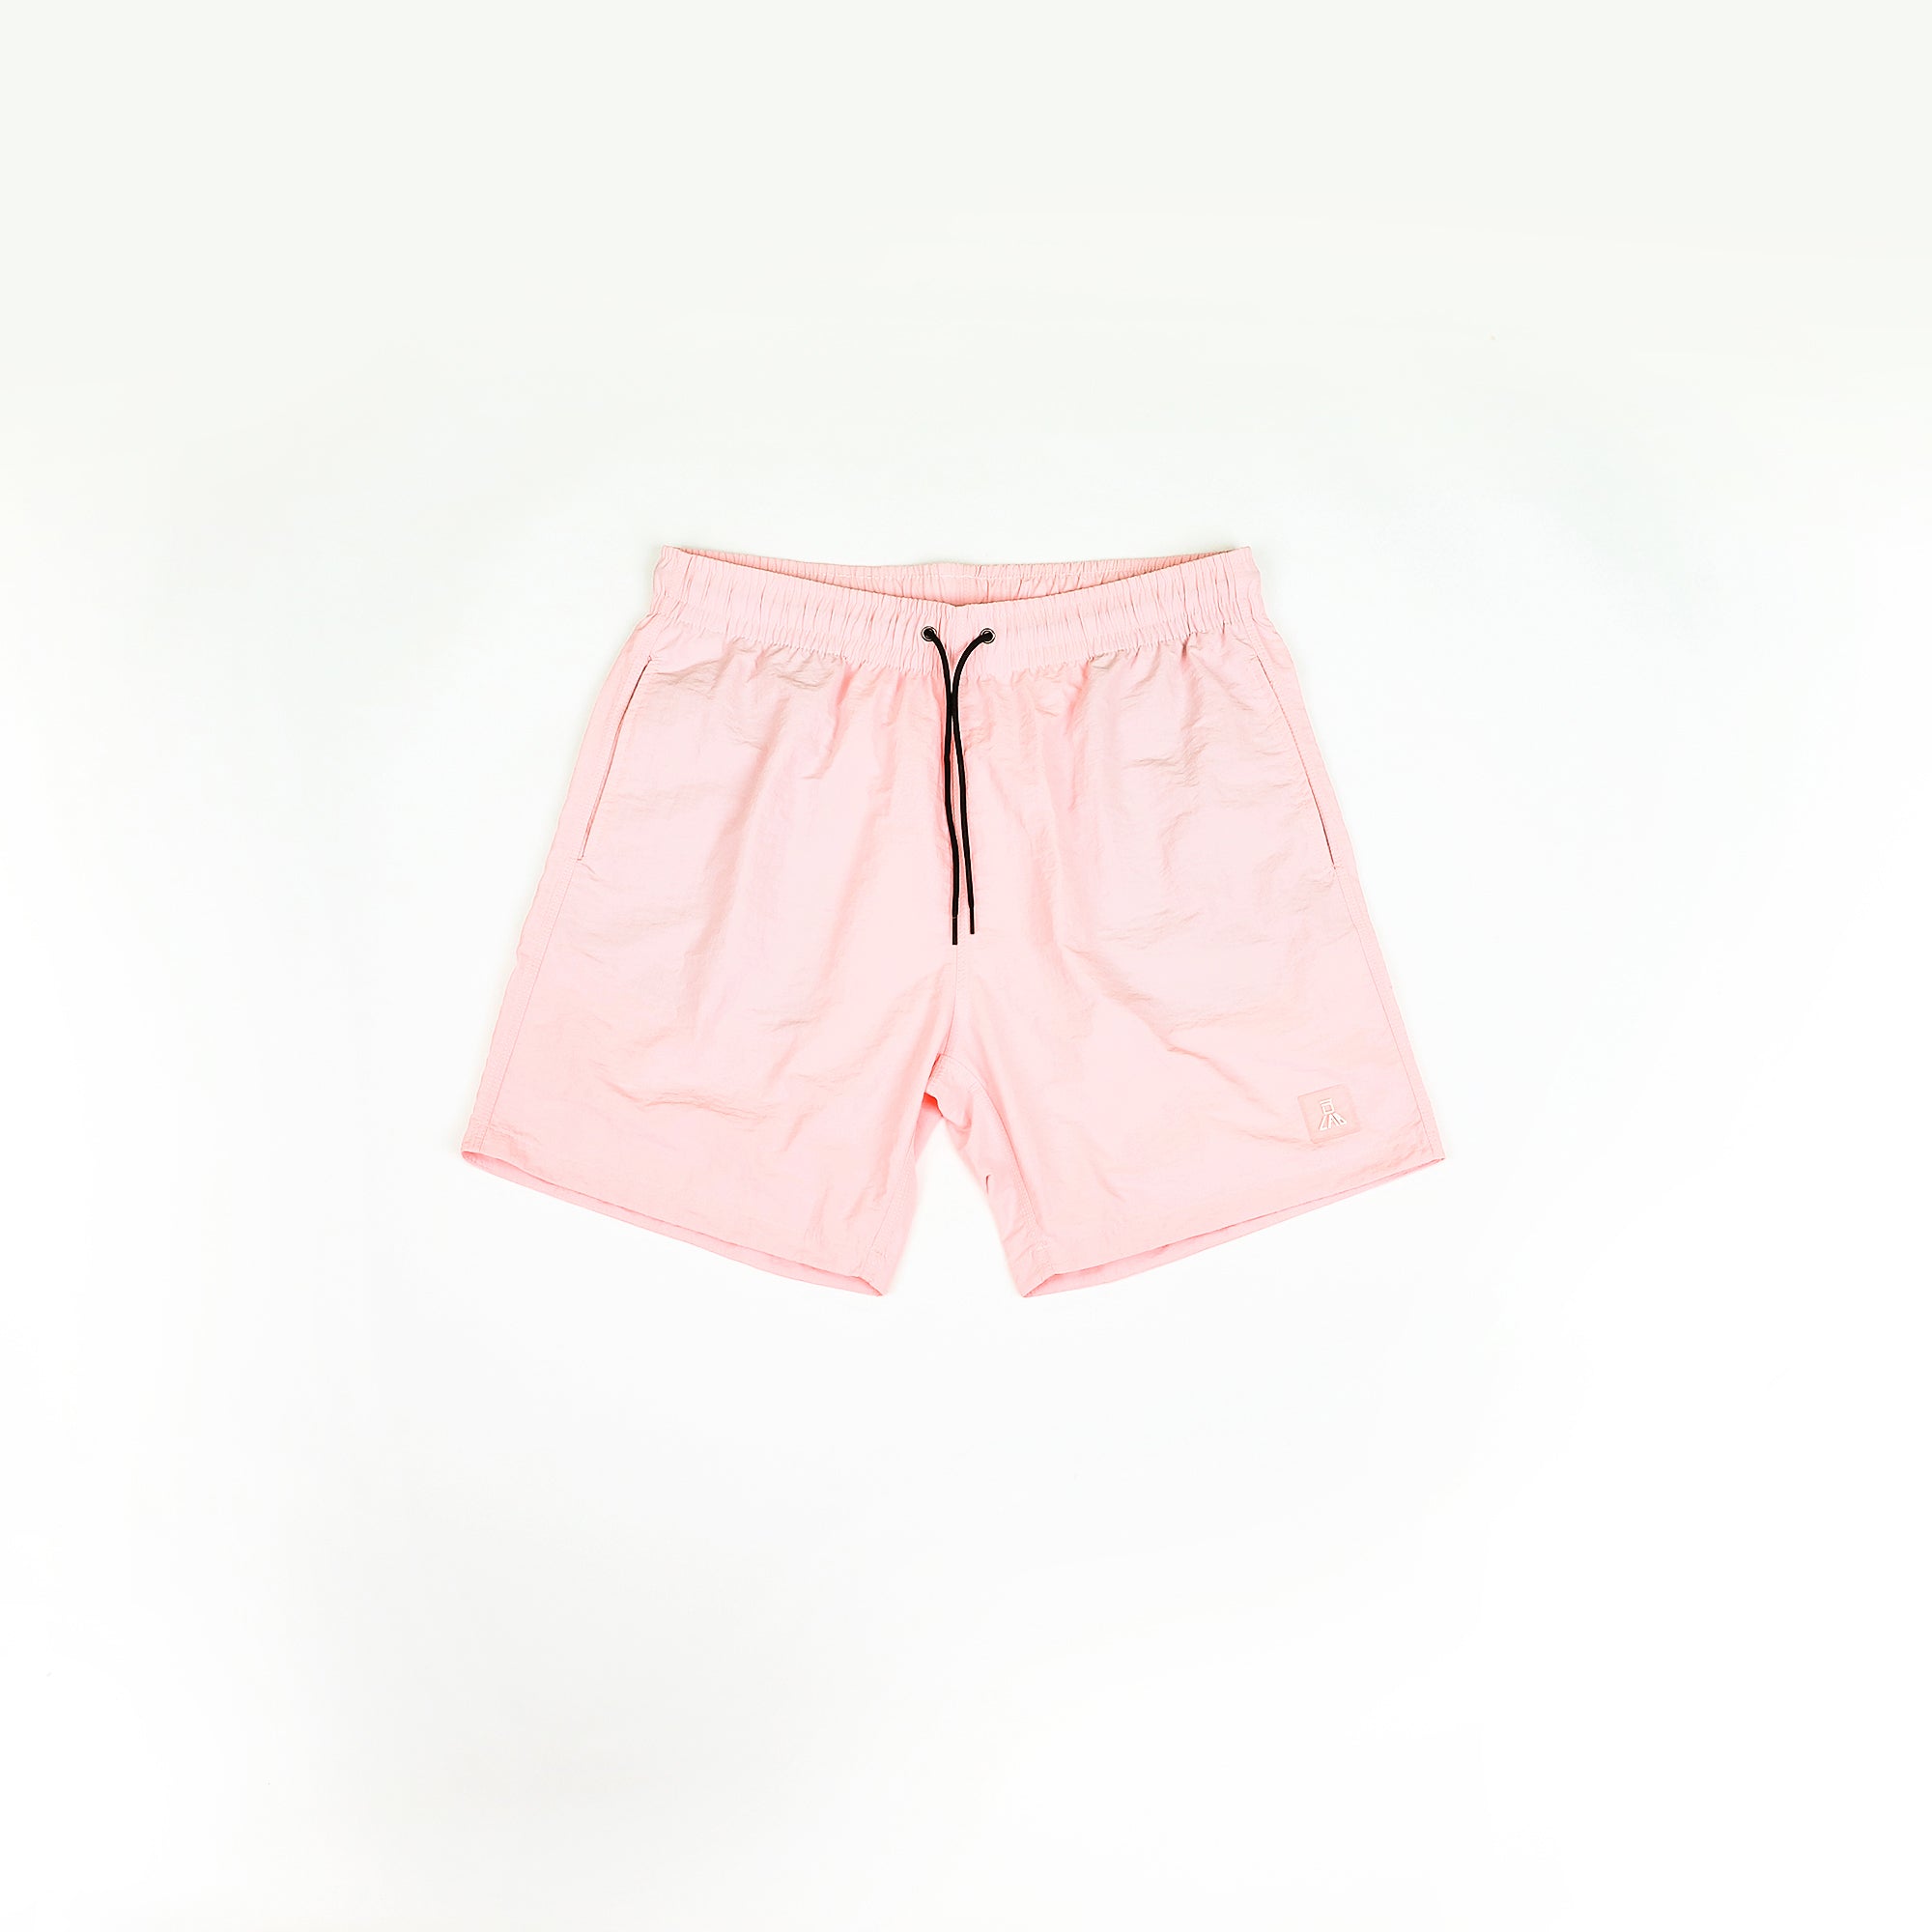 DLAB Men's Hybrid Board Shorts (Pink)